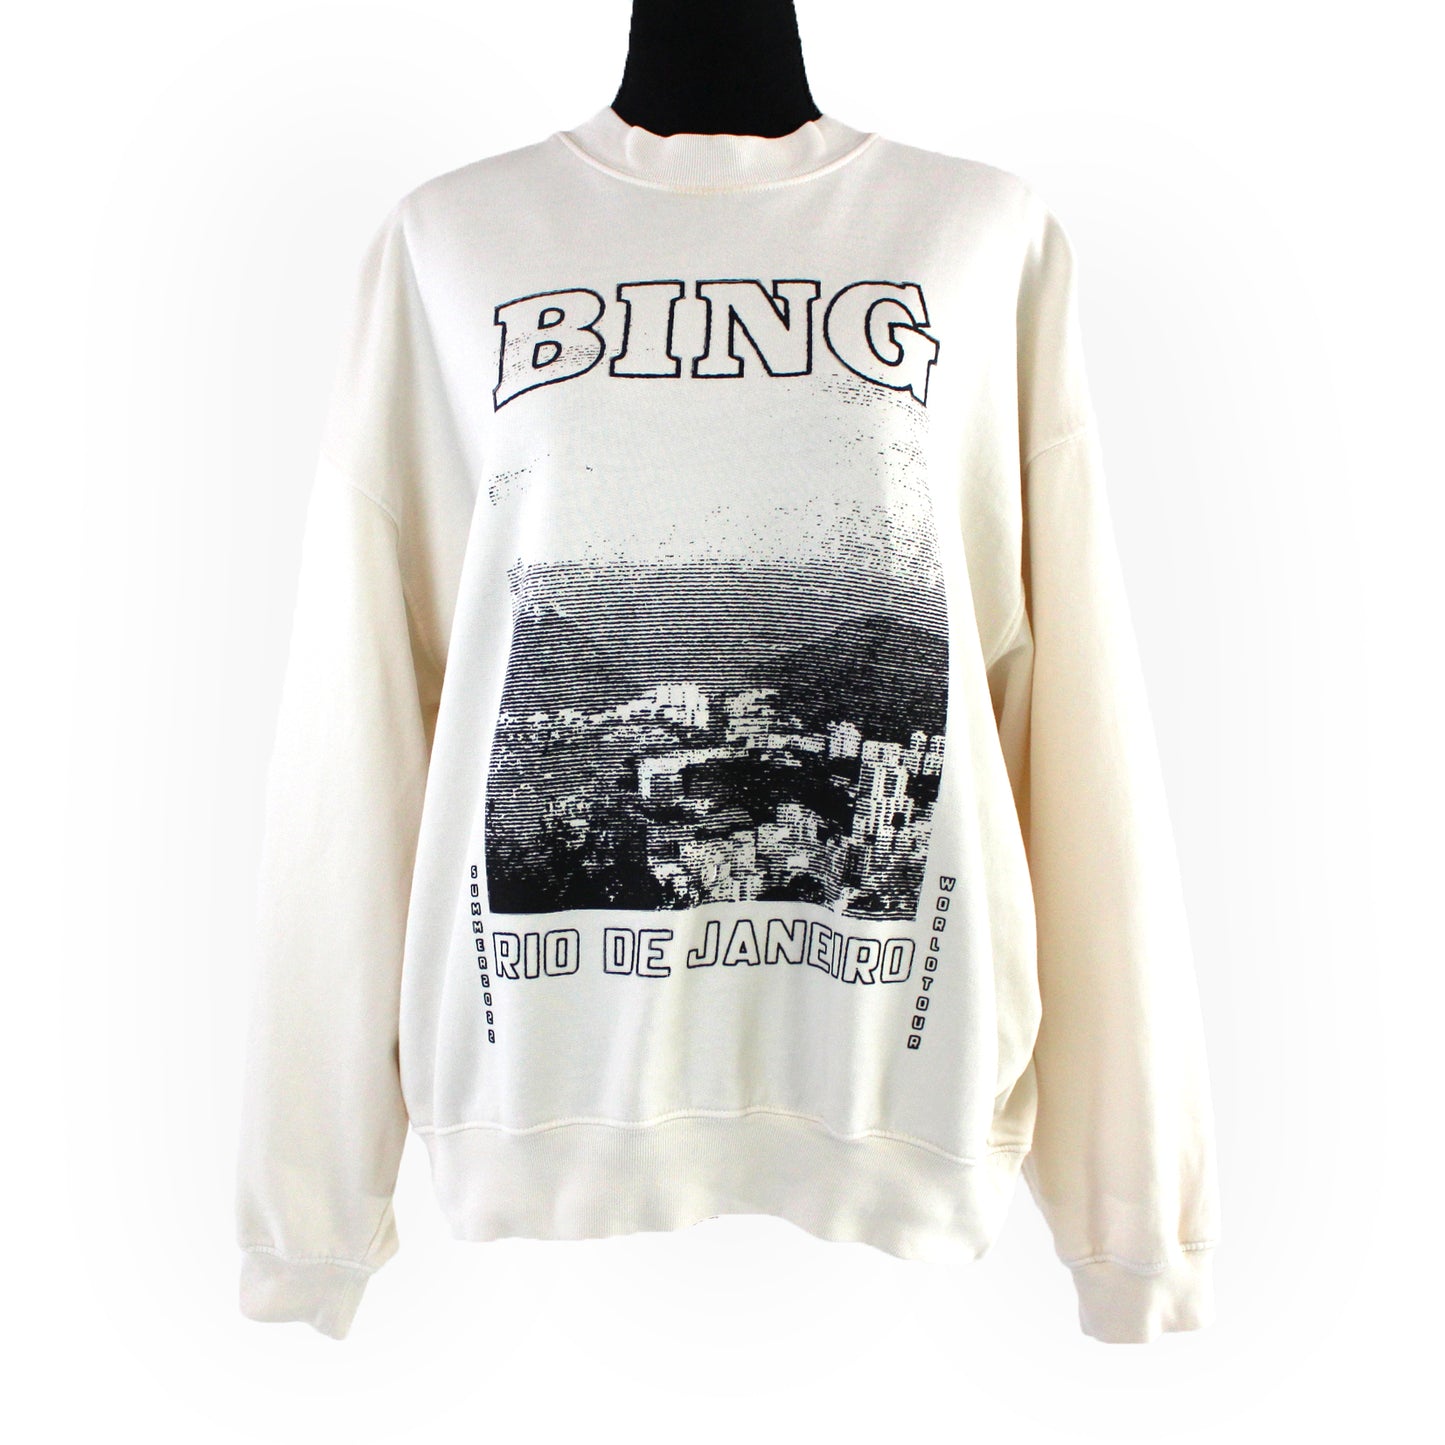 Anine Bing Jaci Graphic Sweatshirt